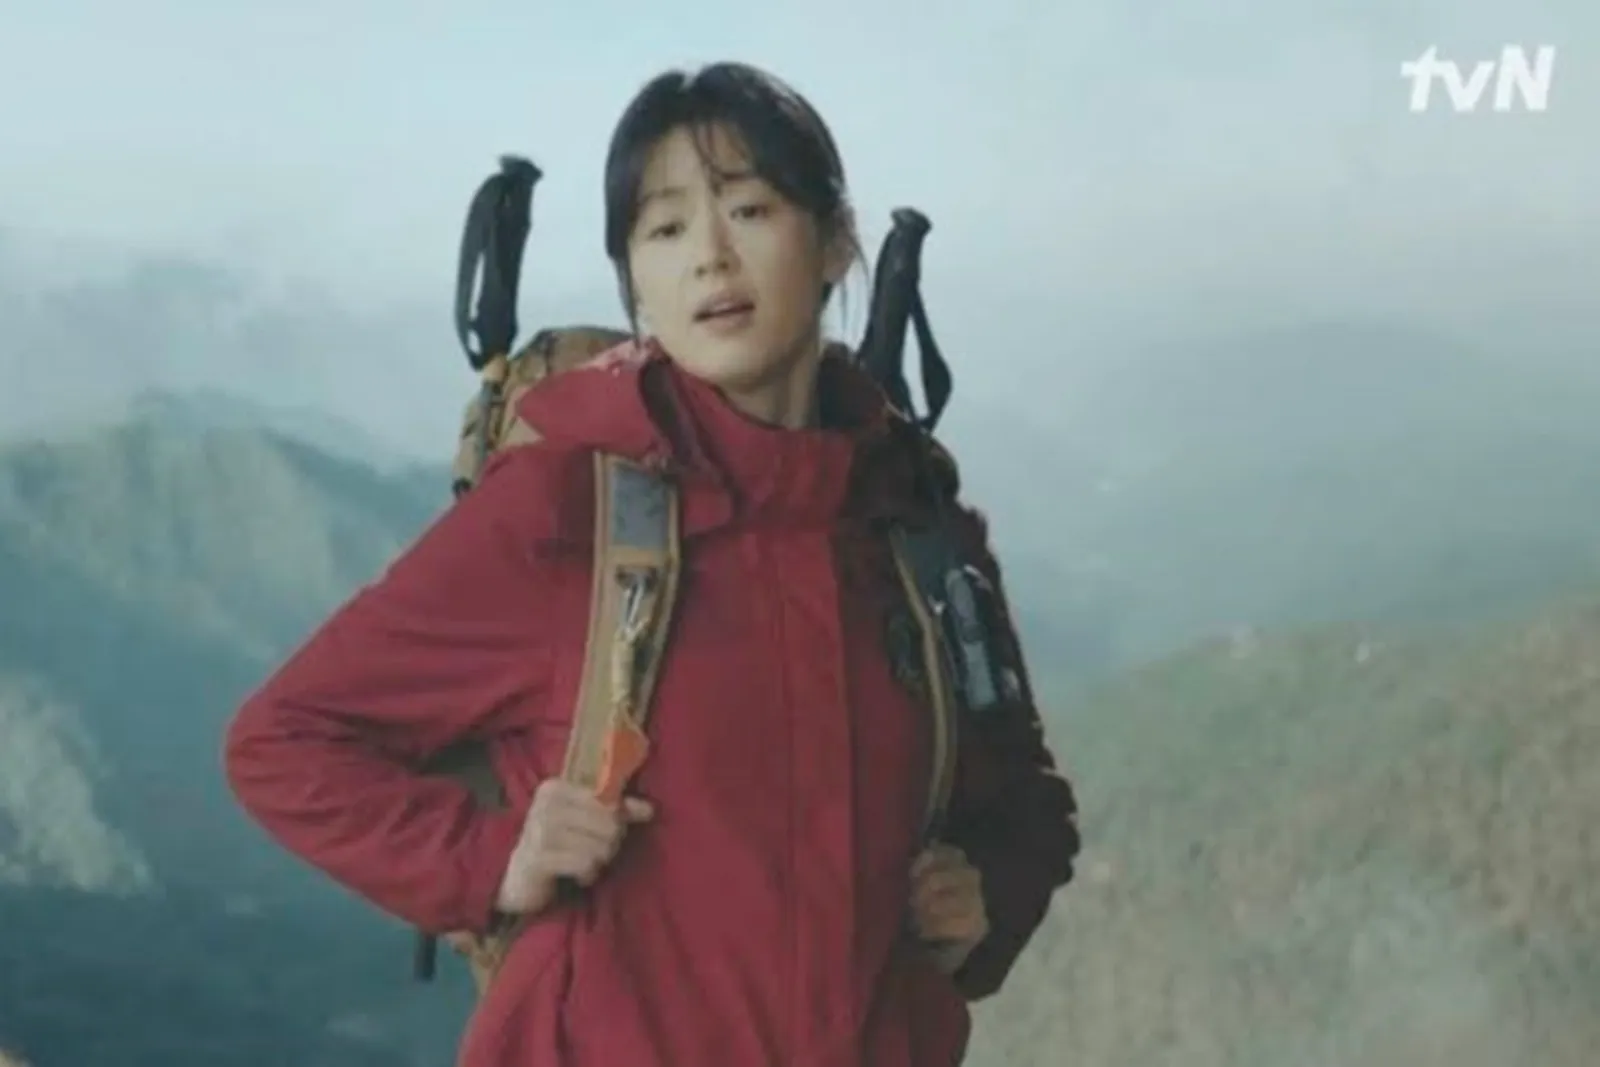 Raih Rating Tinggi, Drama Korea 'Jirisan' Malah Kena Kritik Warganet